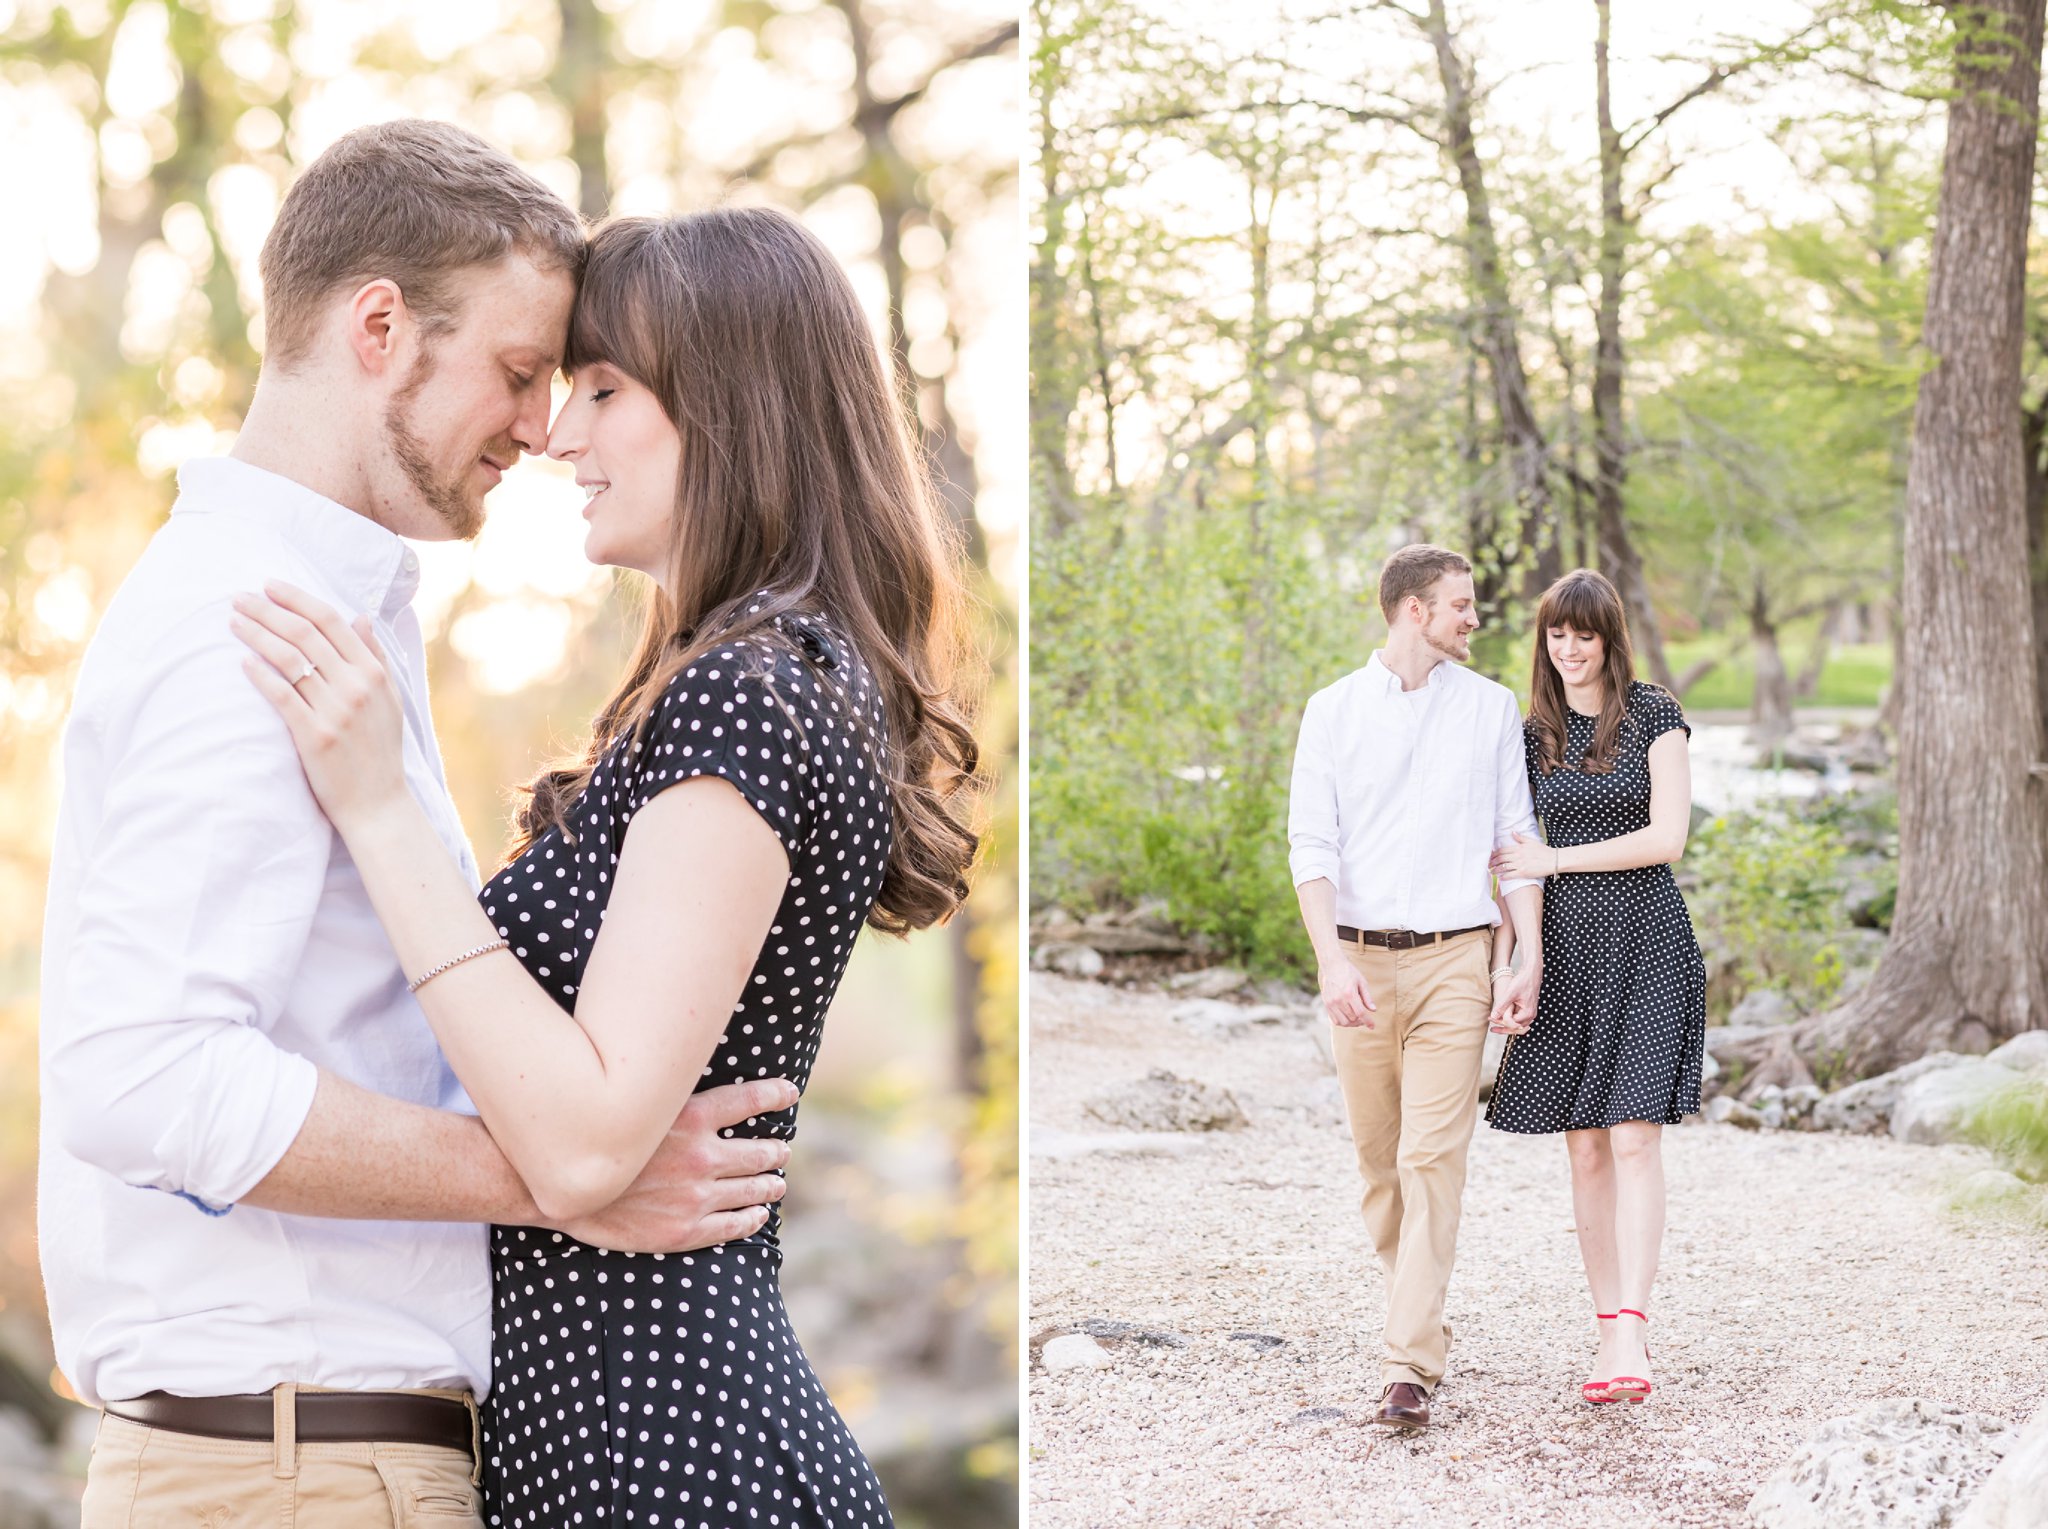 Katie & Brad's Engagement Session in Gruene, TX by Dawn Elizabeth Studios, San Antonio Wedding Photographer, New Braunfels Wedding Photographer